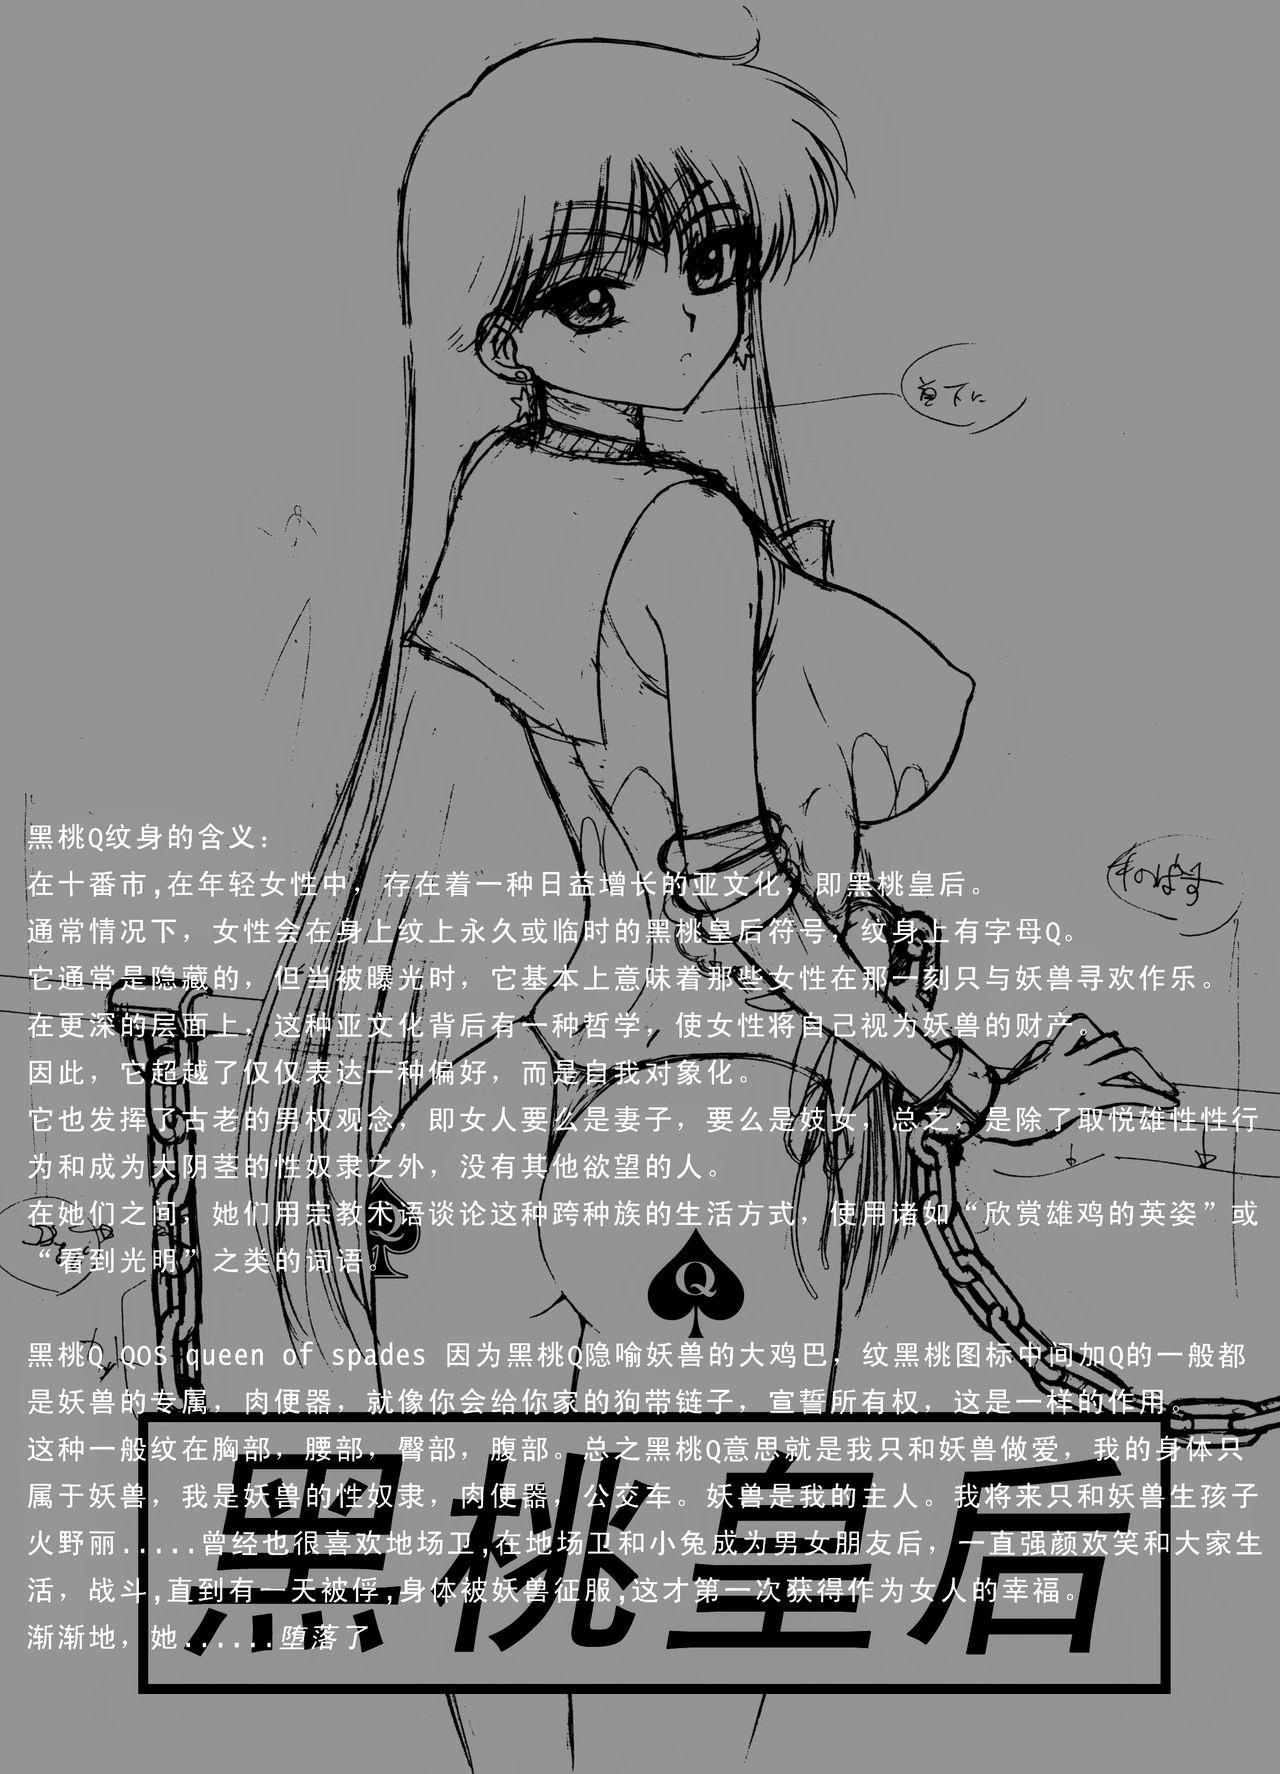 Brunettes QUEEN OF SPADES - 黑桃皇后 - Sailor moon Analsex - Page 5